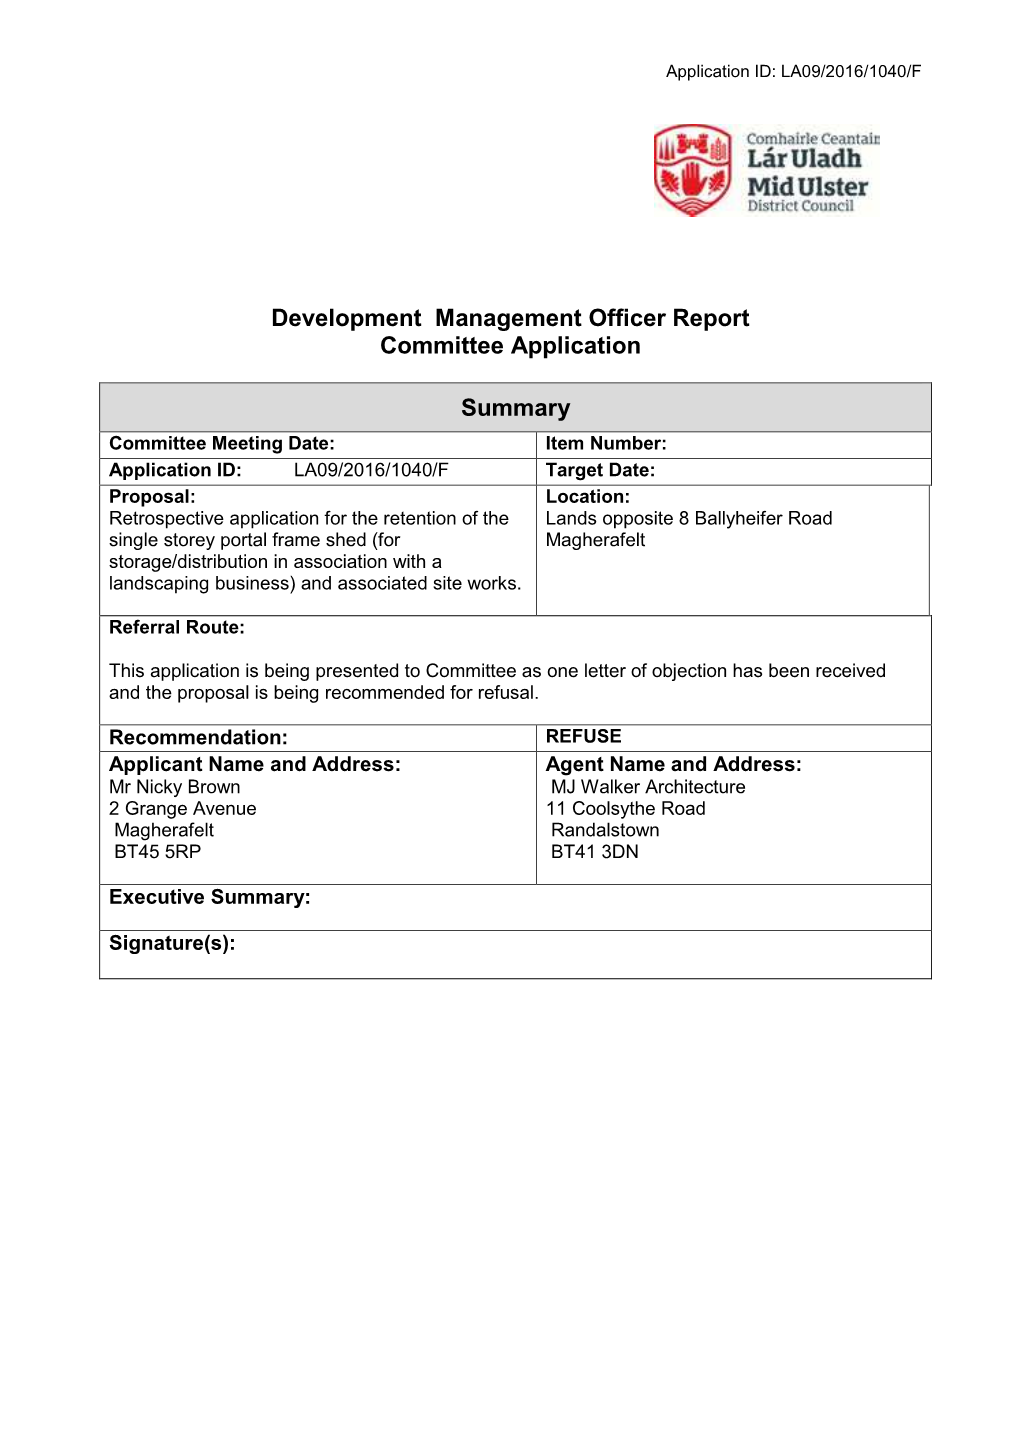 Development Management Officer Report Committee Application